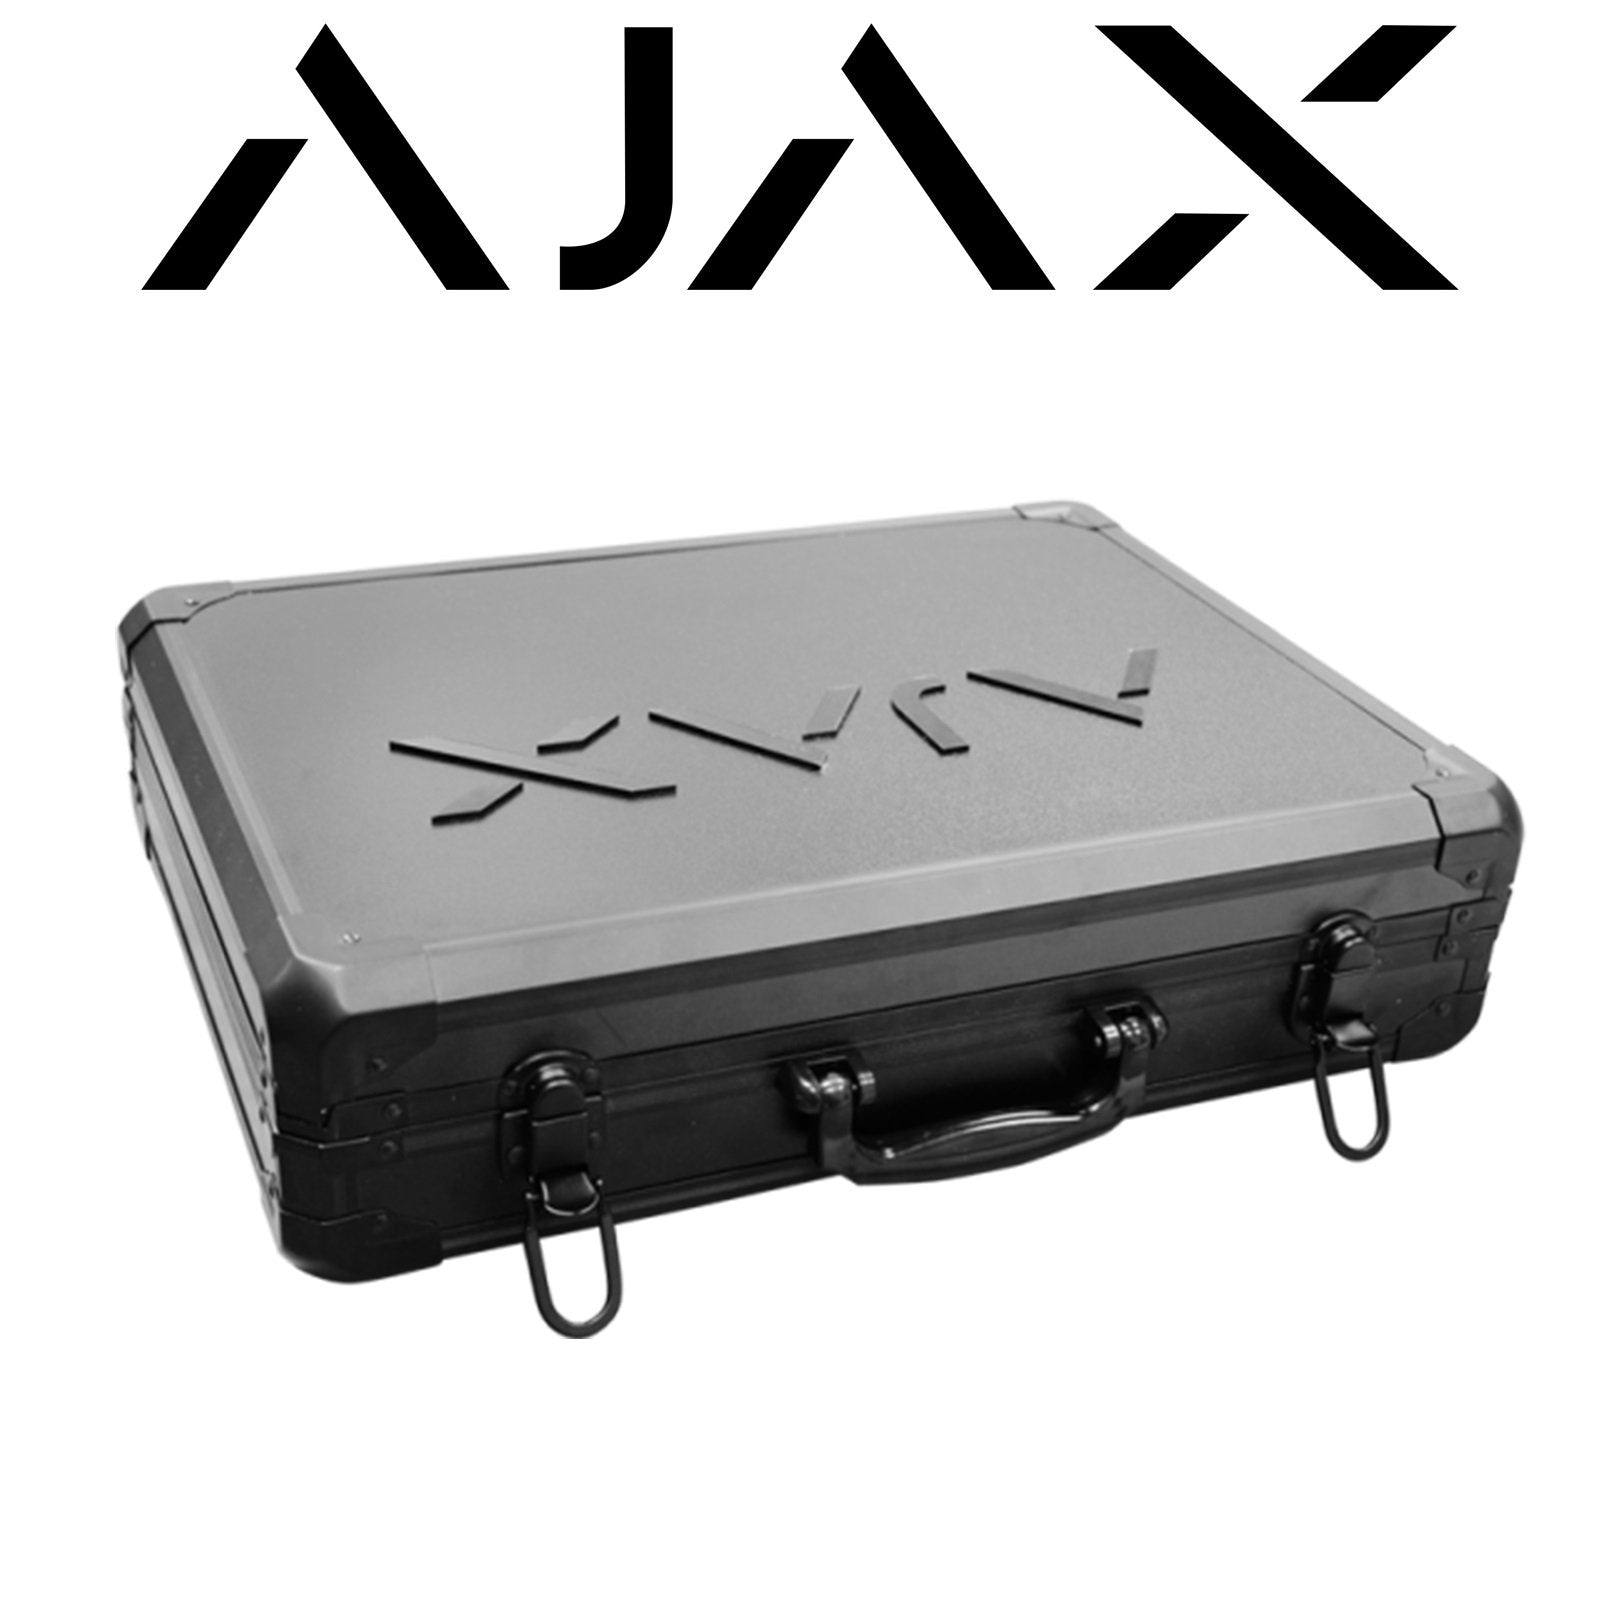 Ajax Branded Sales Demo Case - Fits 1 x HUB2, 1 x MotionProtect, 1 x DoorProtect, 1 x ControlFob, 1 x LeaksProtect, 1 x HomeSiren, 1 x FireProtect, 1 x MotionProtectCurtain & 1 x Button